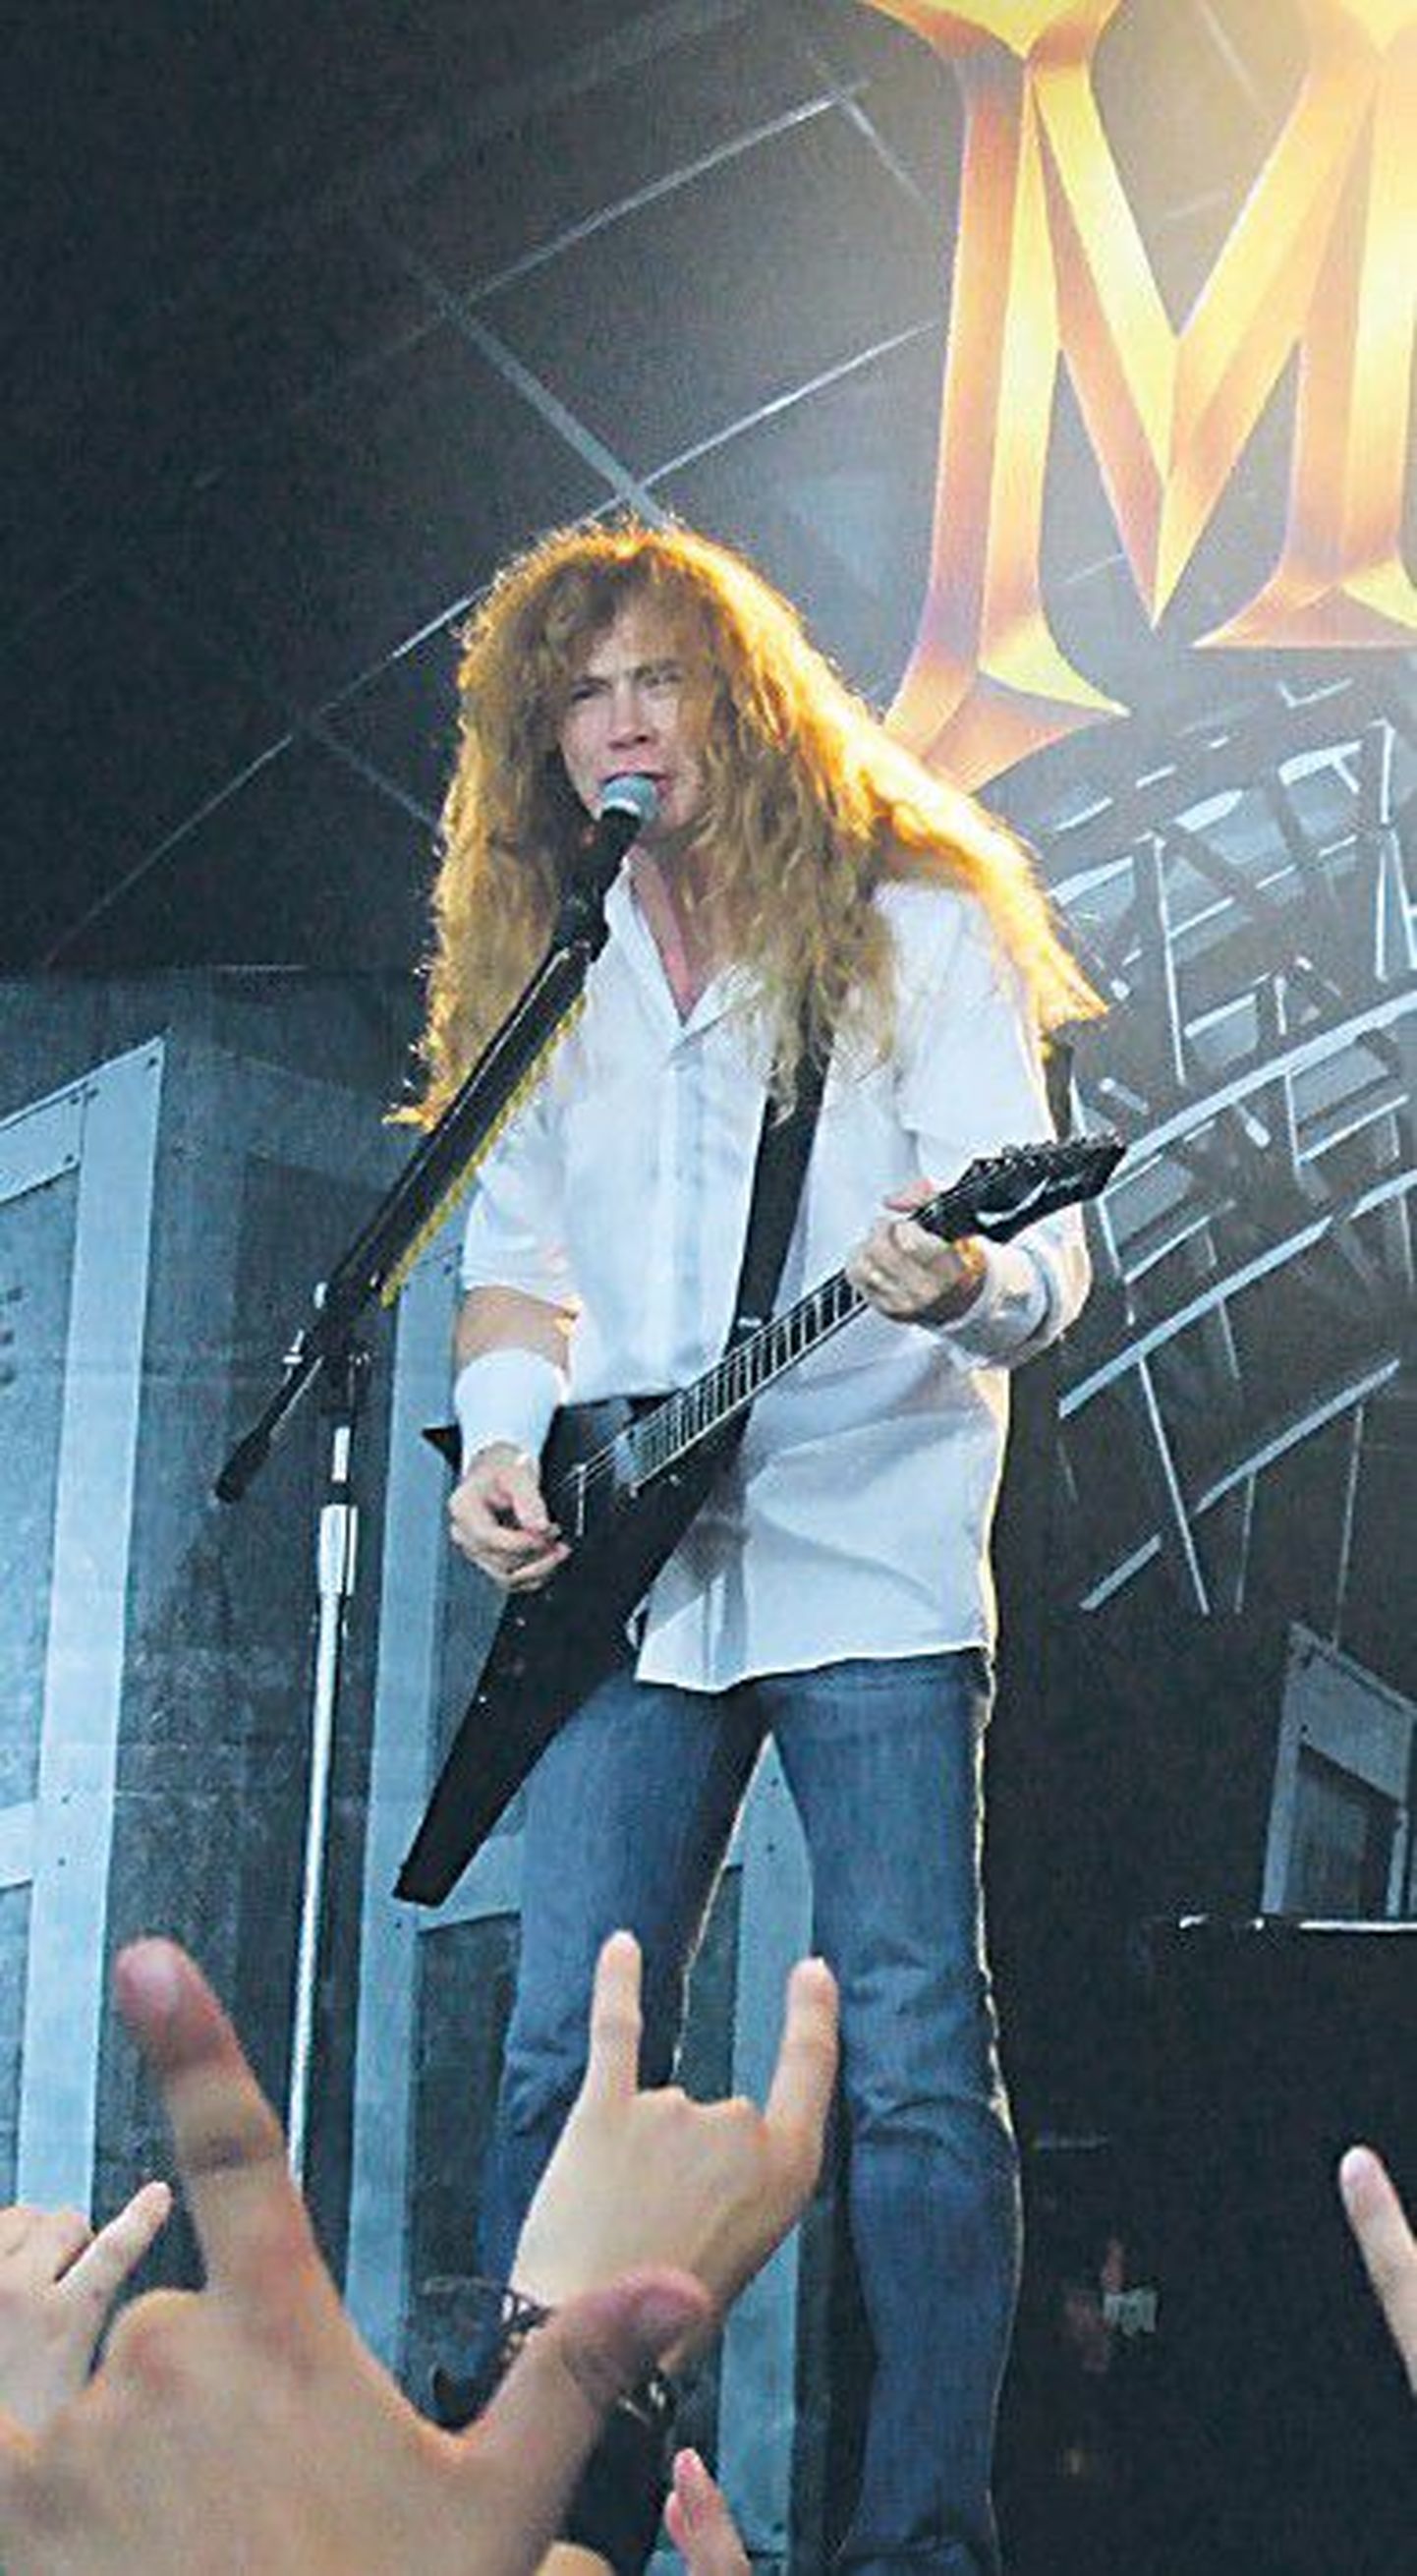 Солист Megadeth Дэйв Мастейн дал мощный концерт.